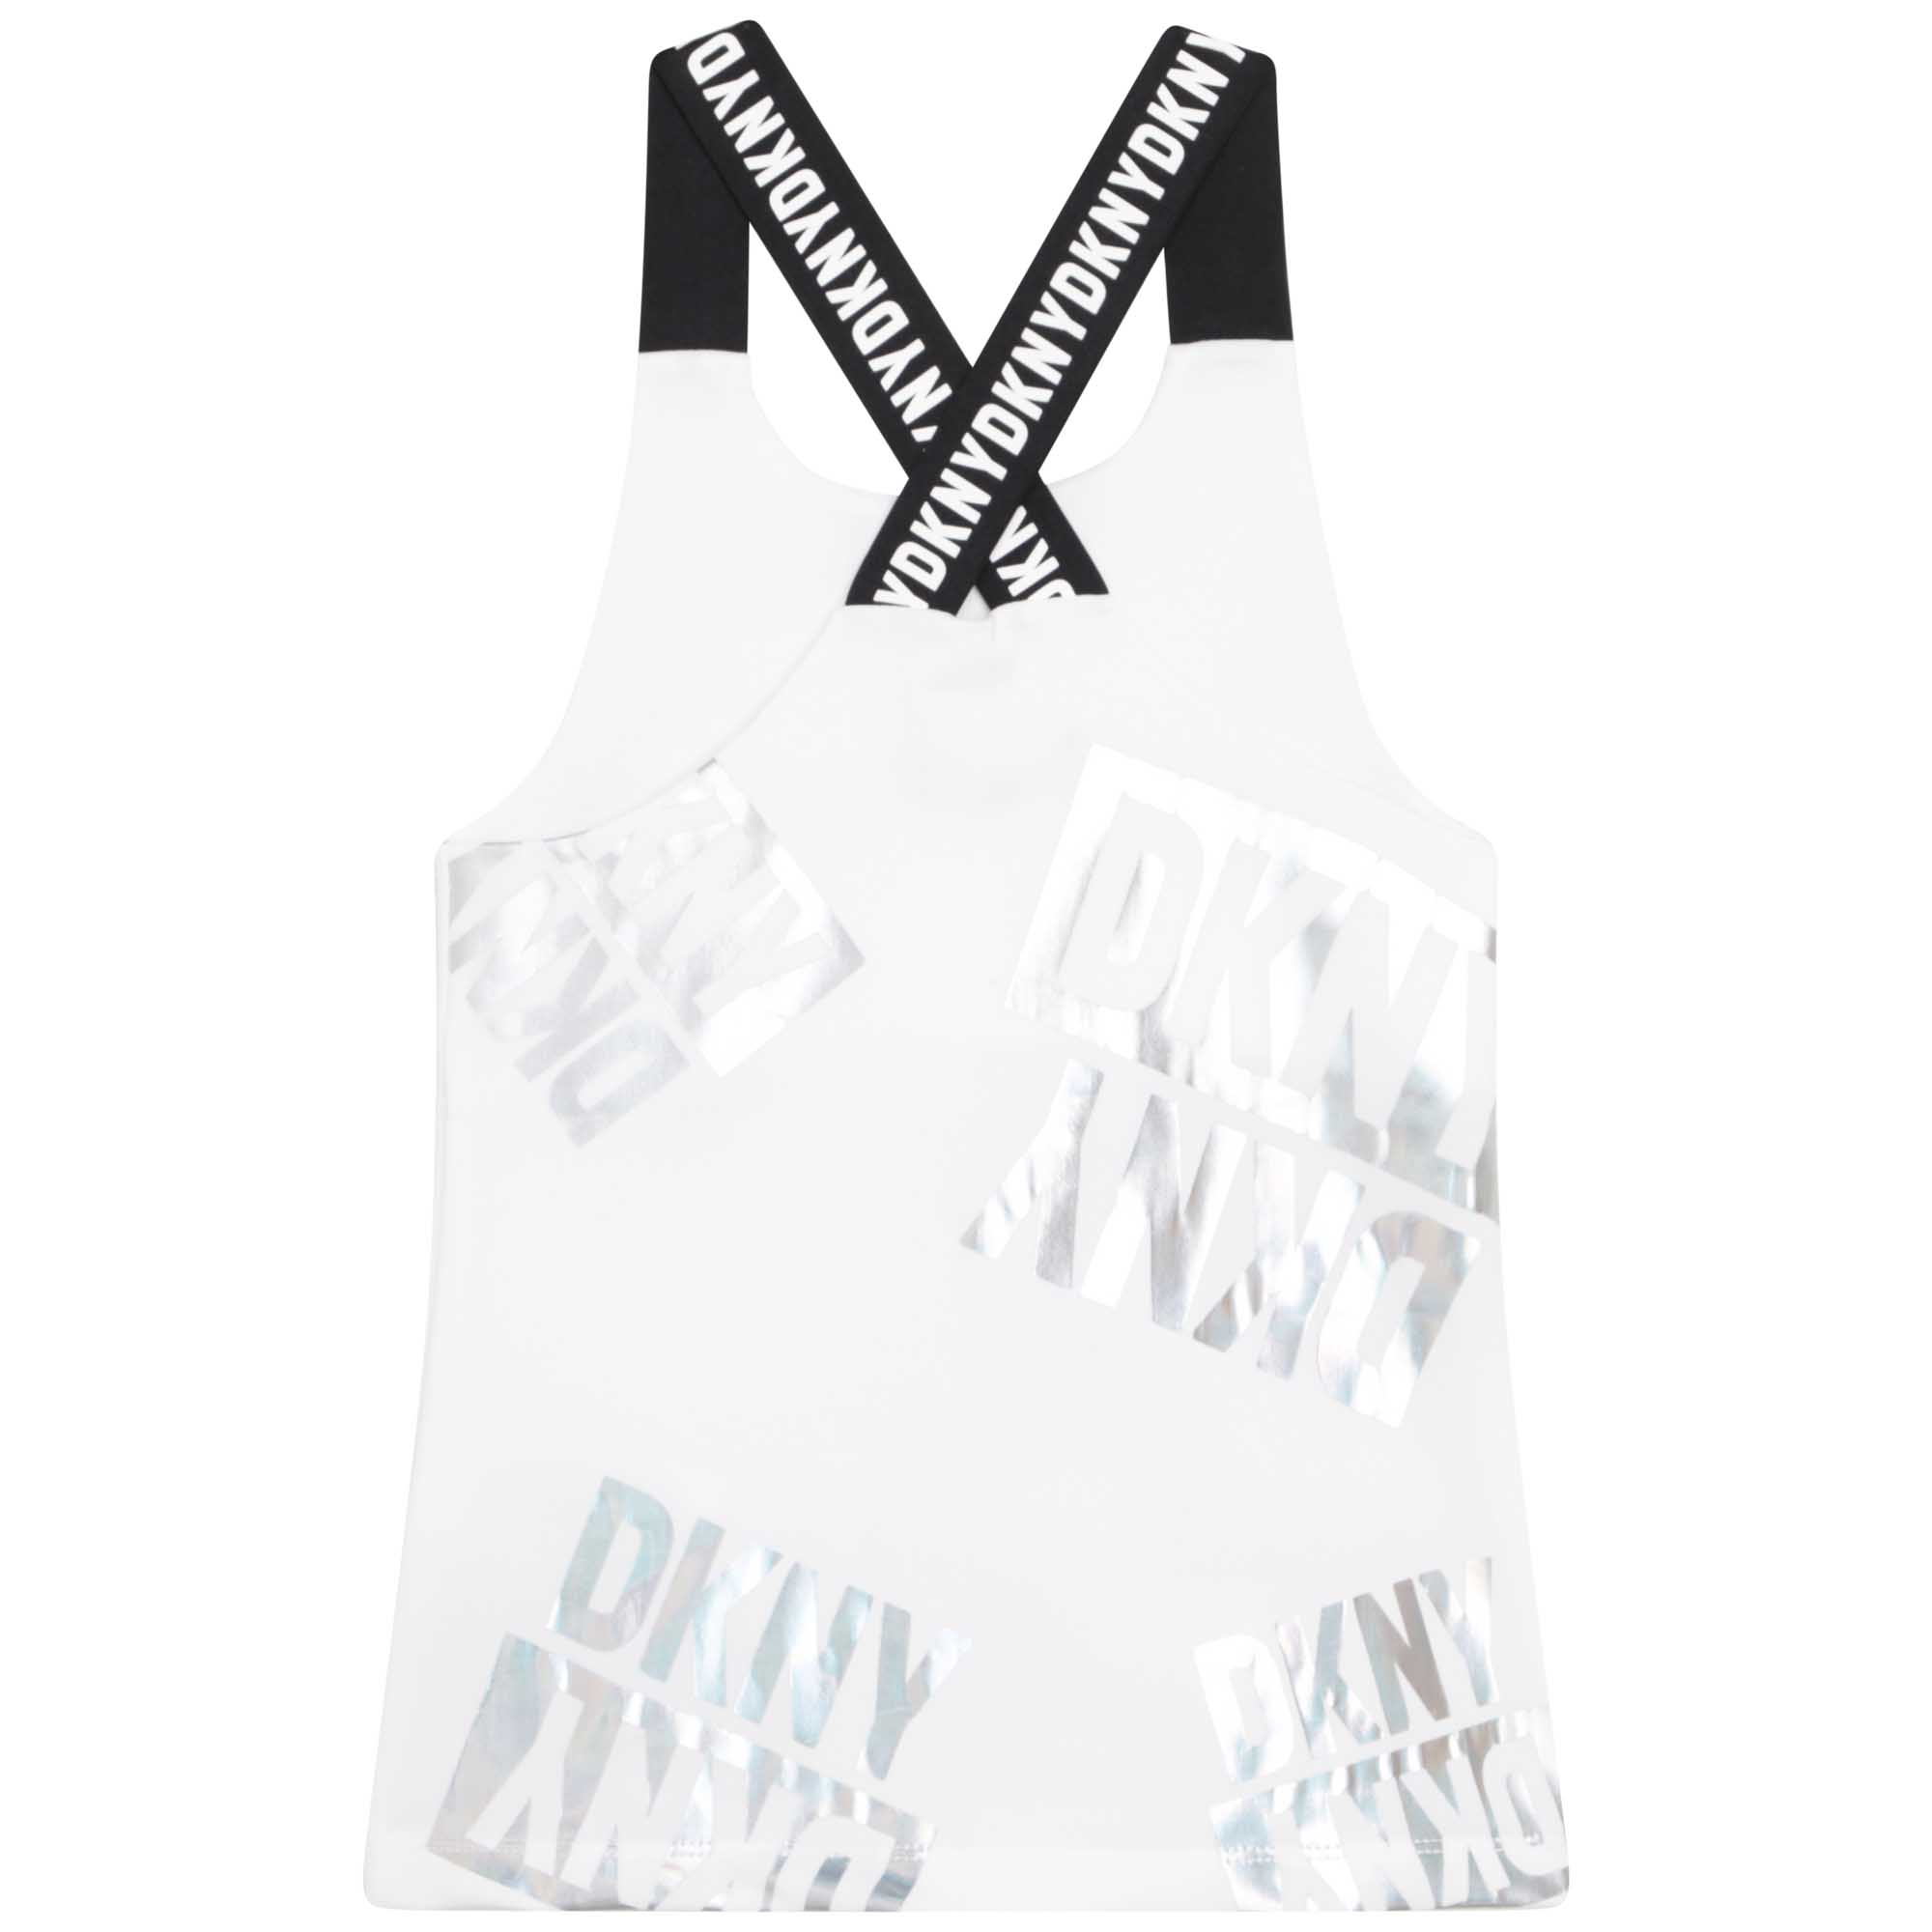 Cross-strapped vest top DKNY for GIRL